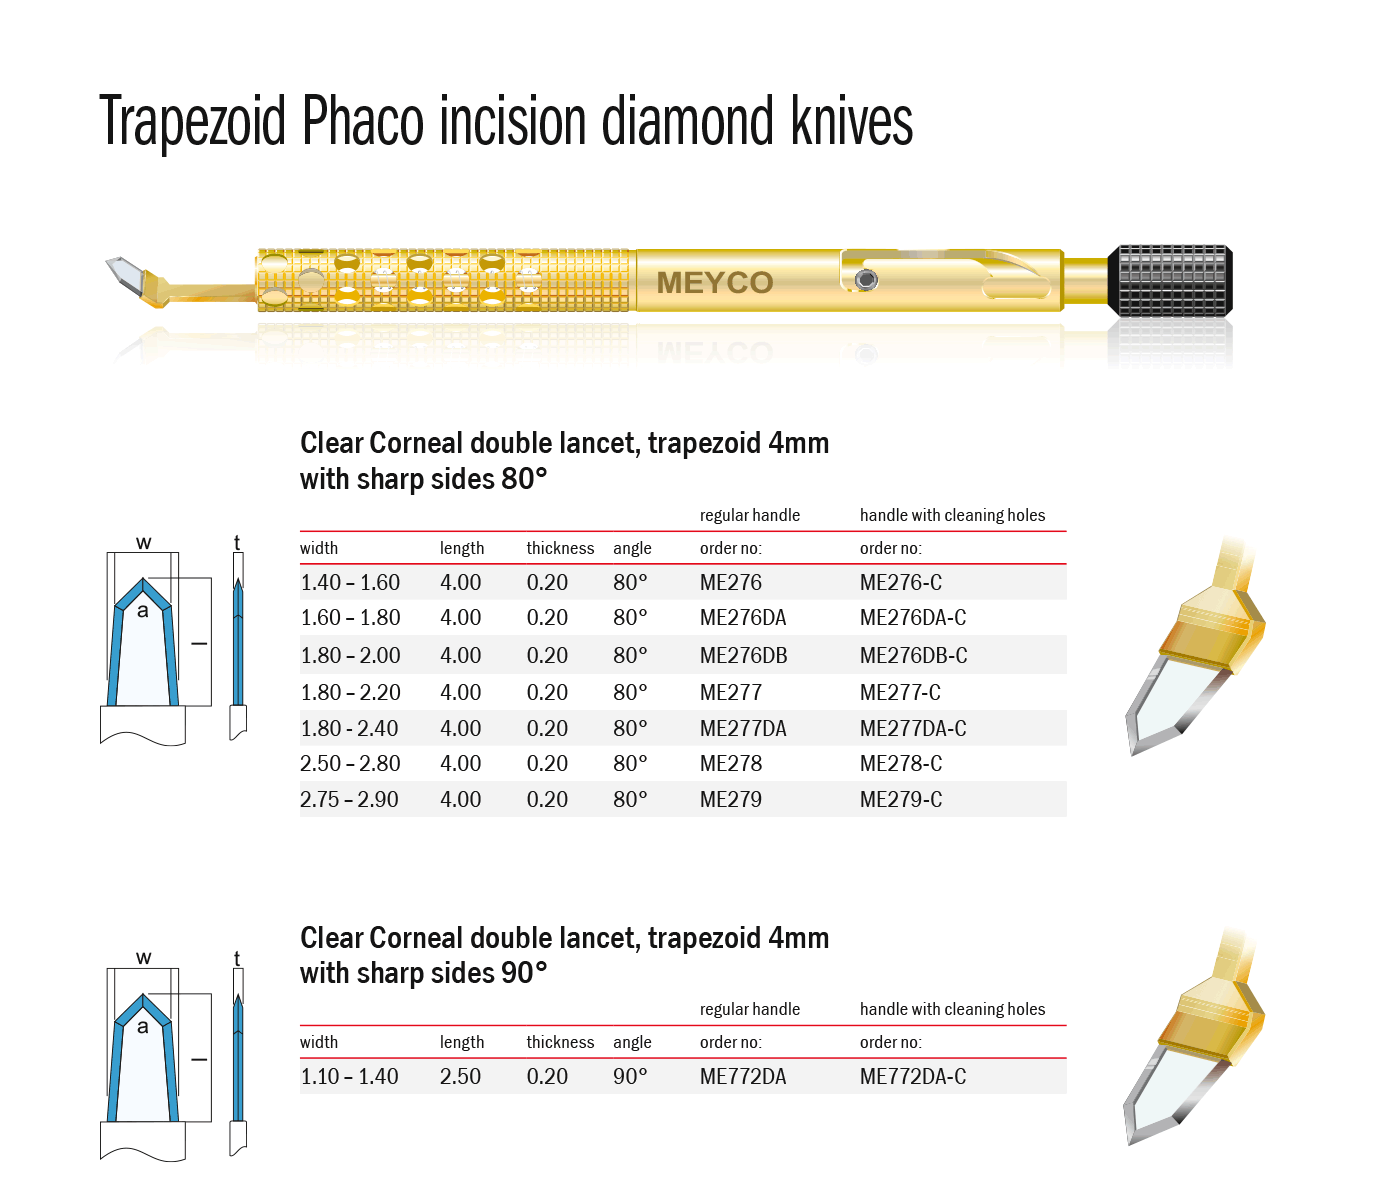 Trapezoid Phaco incision diamond knives